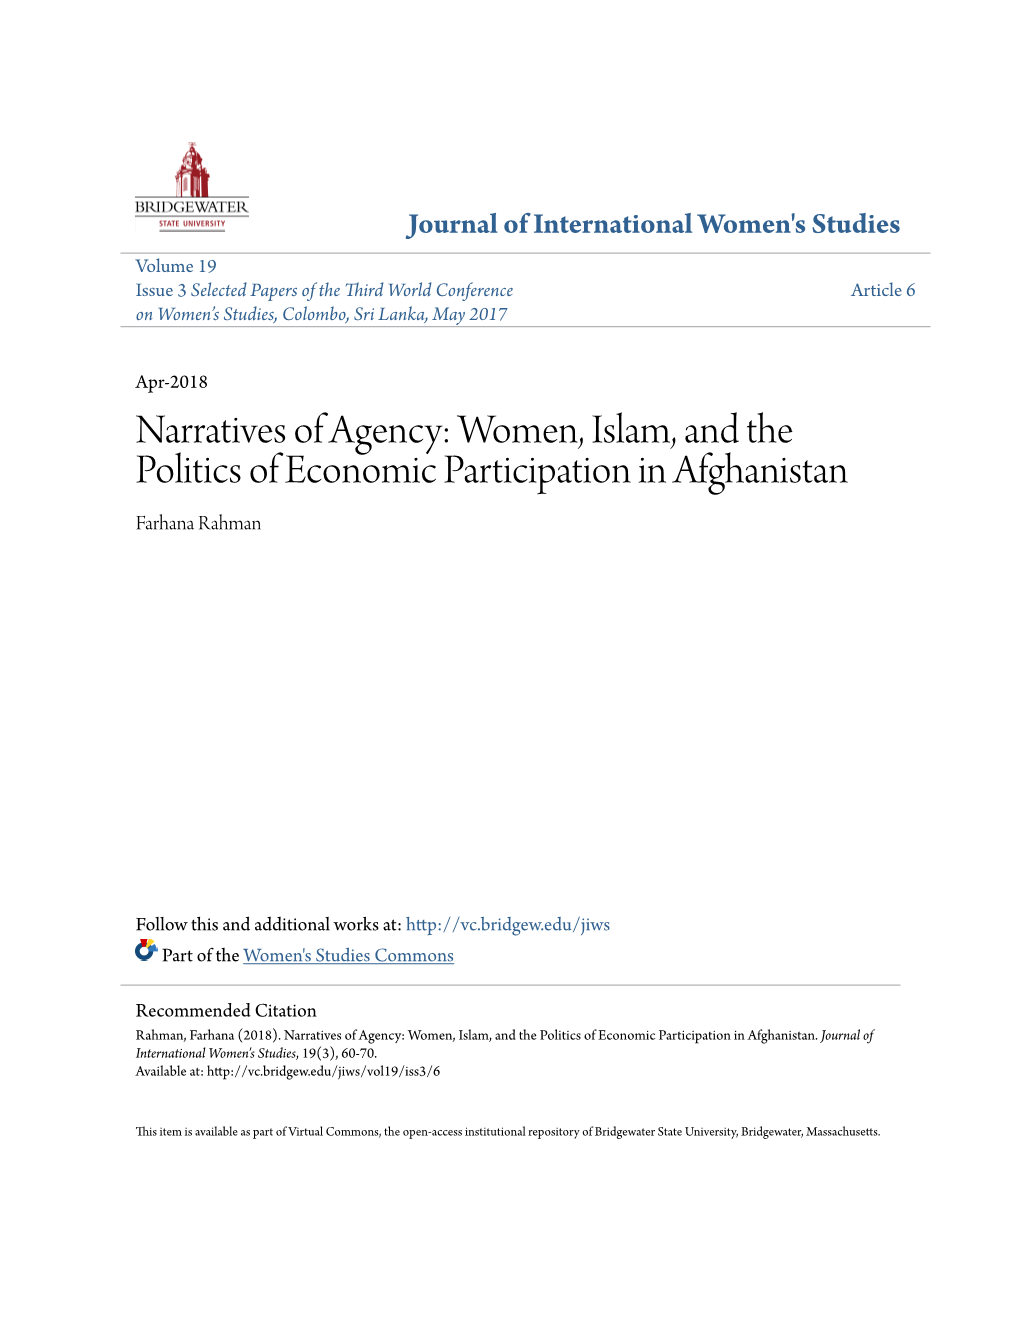 Women, Islam, and the Politics of Economic Participation in Afghanistan Farhana Rahman